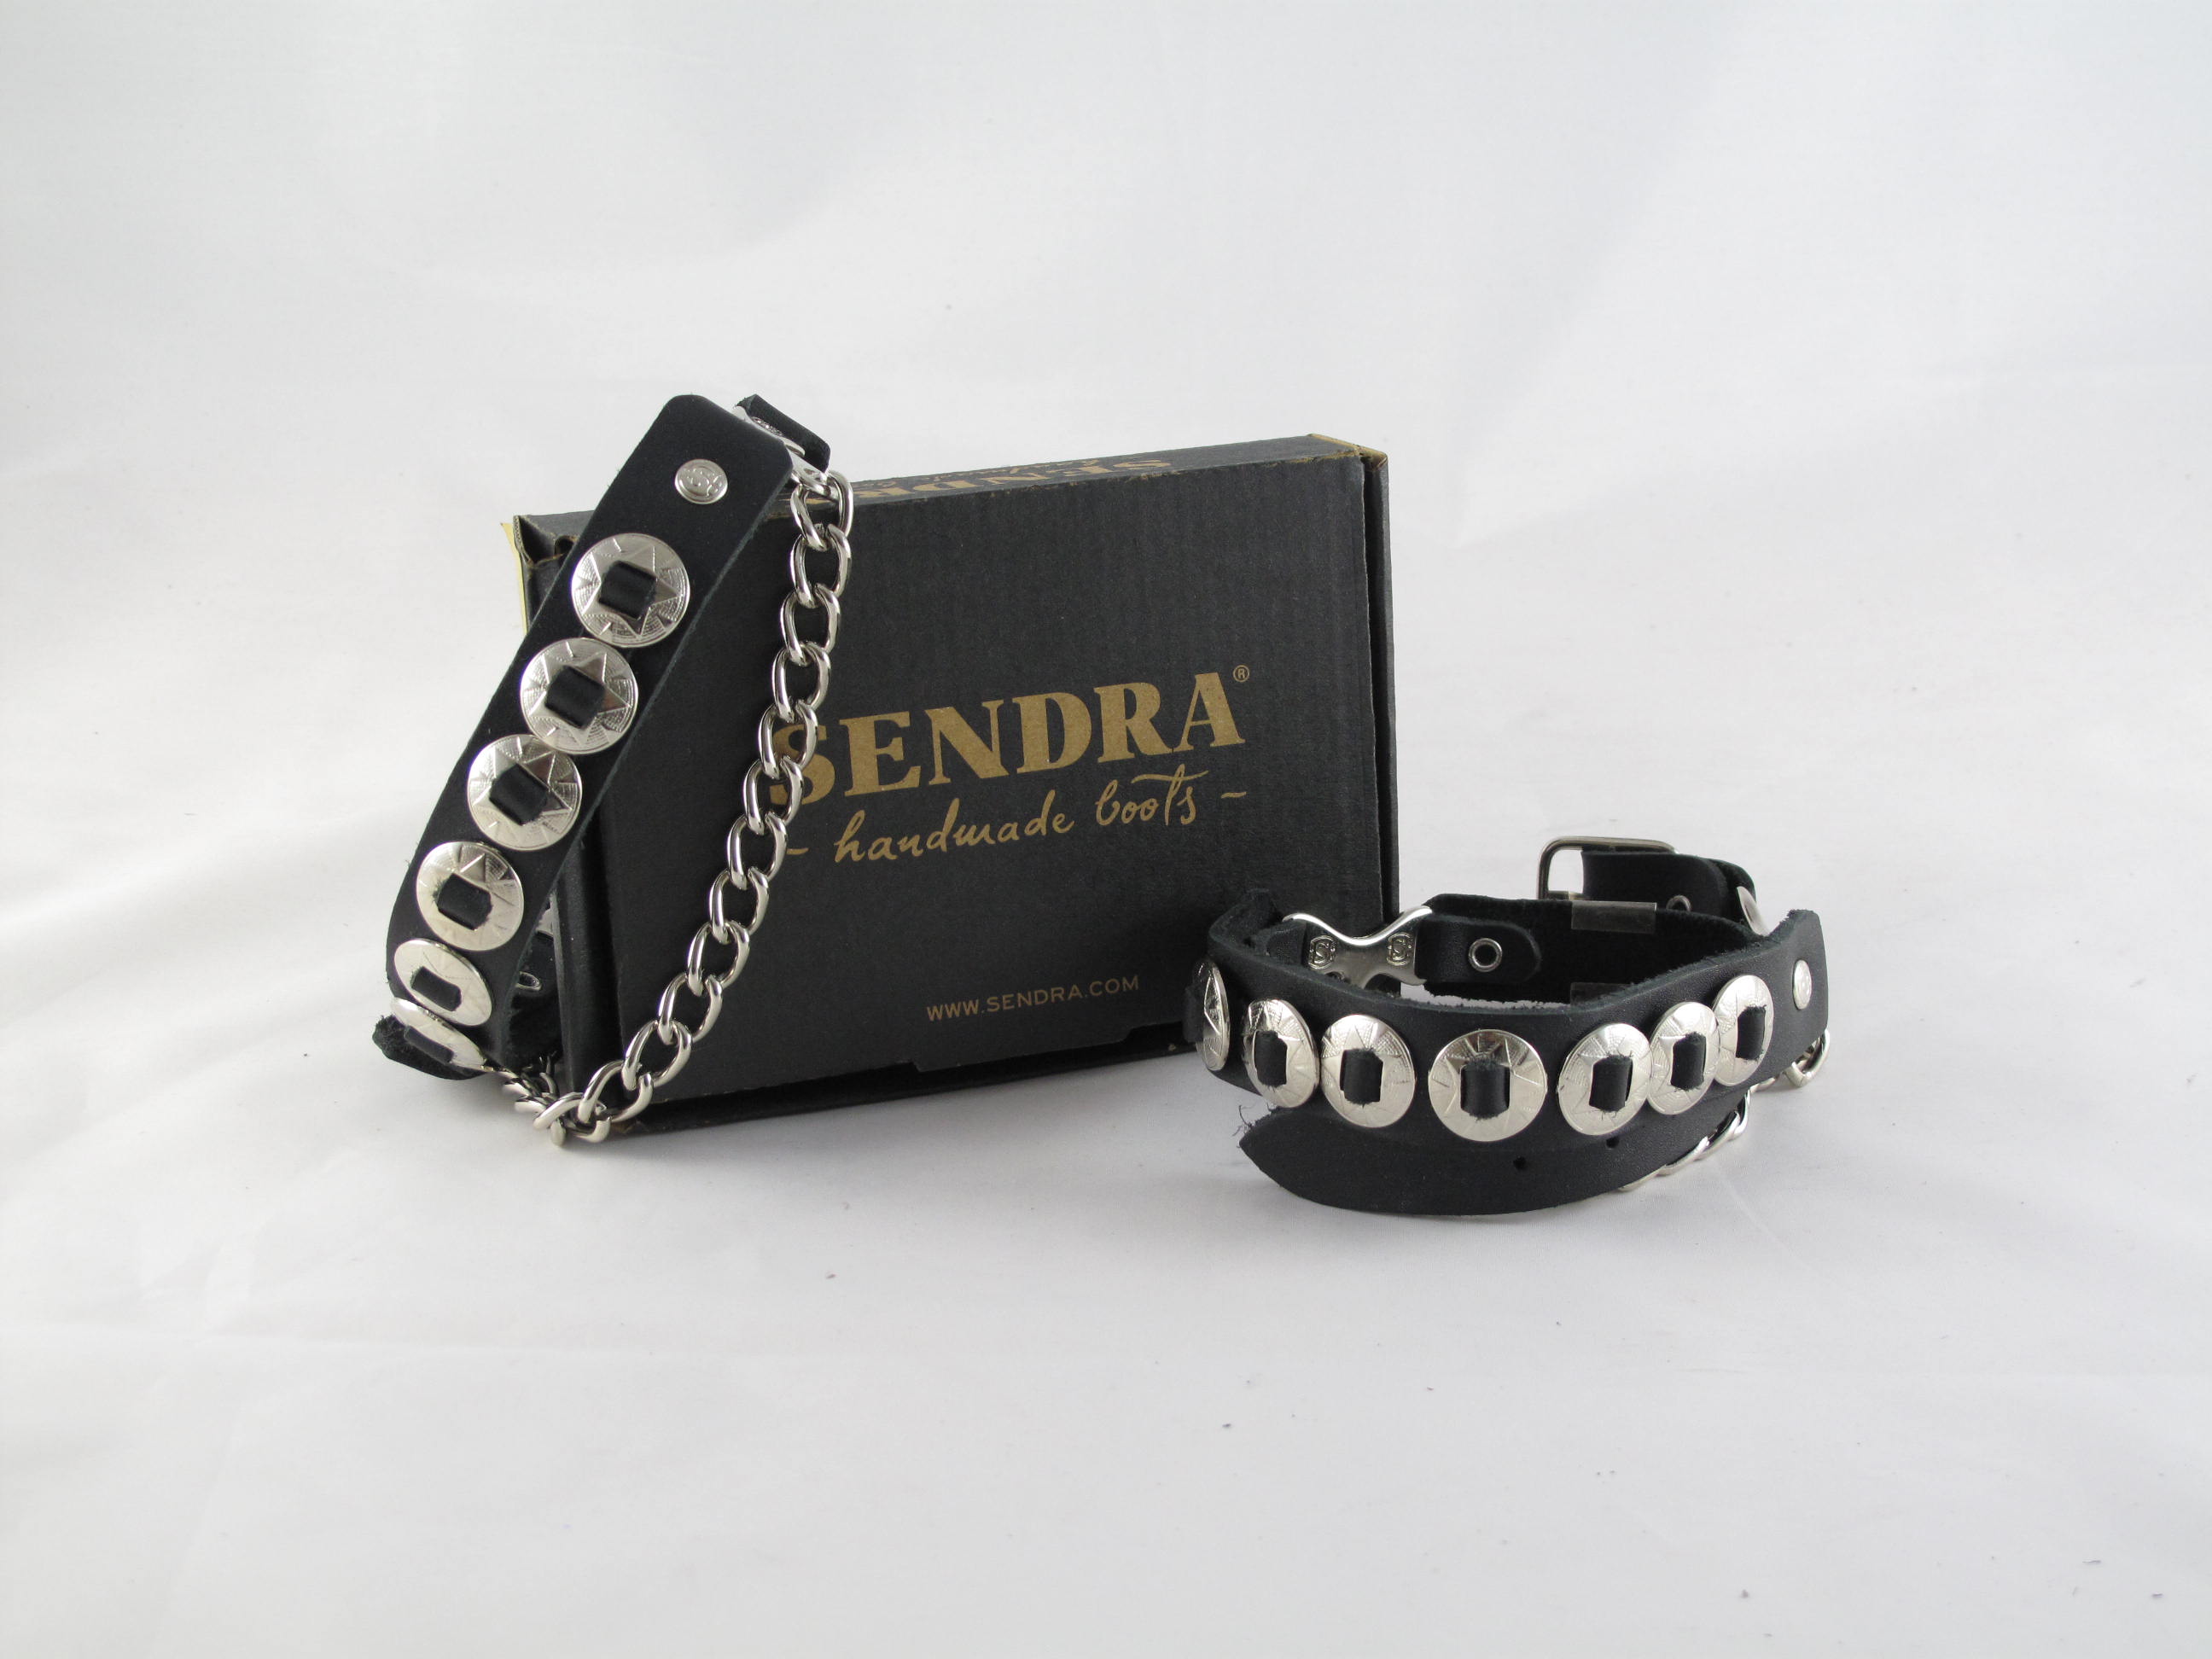 Sendra spurs - black with silver circles/stars